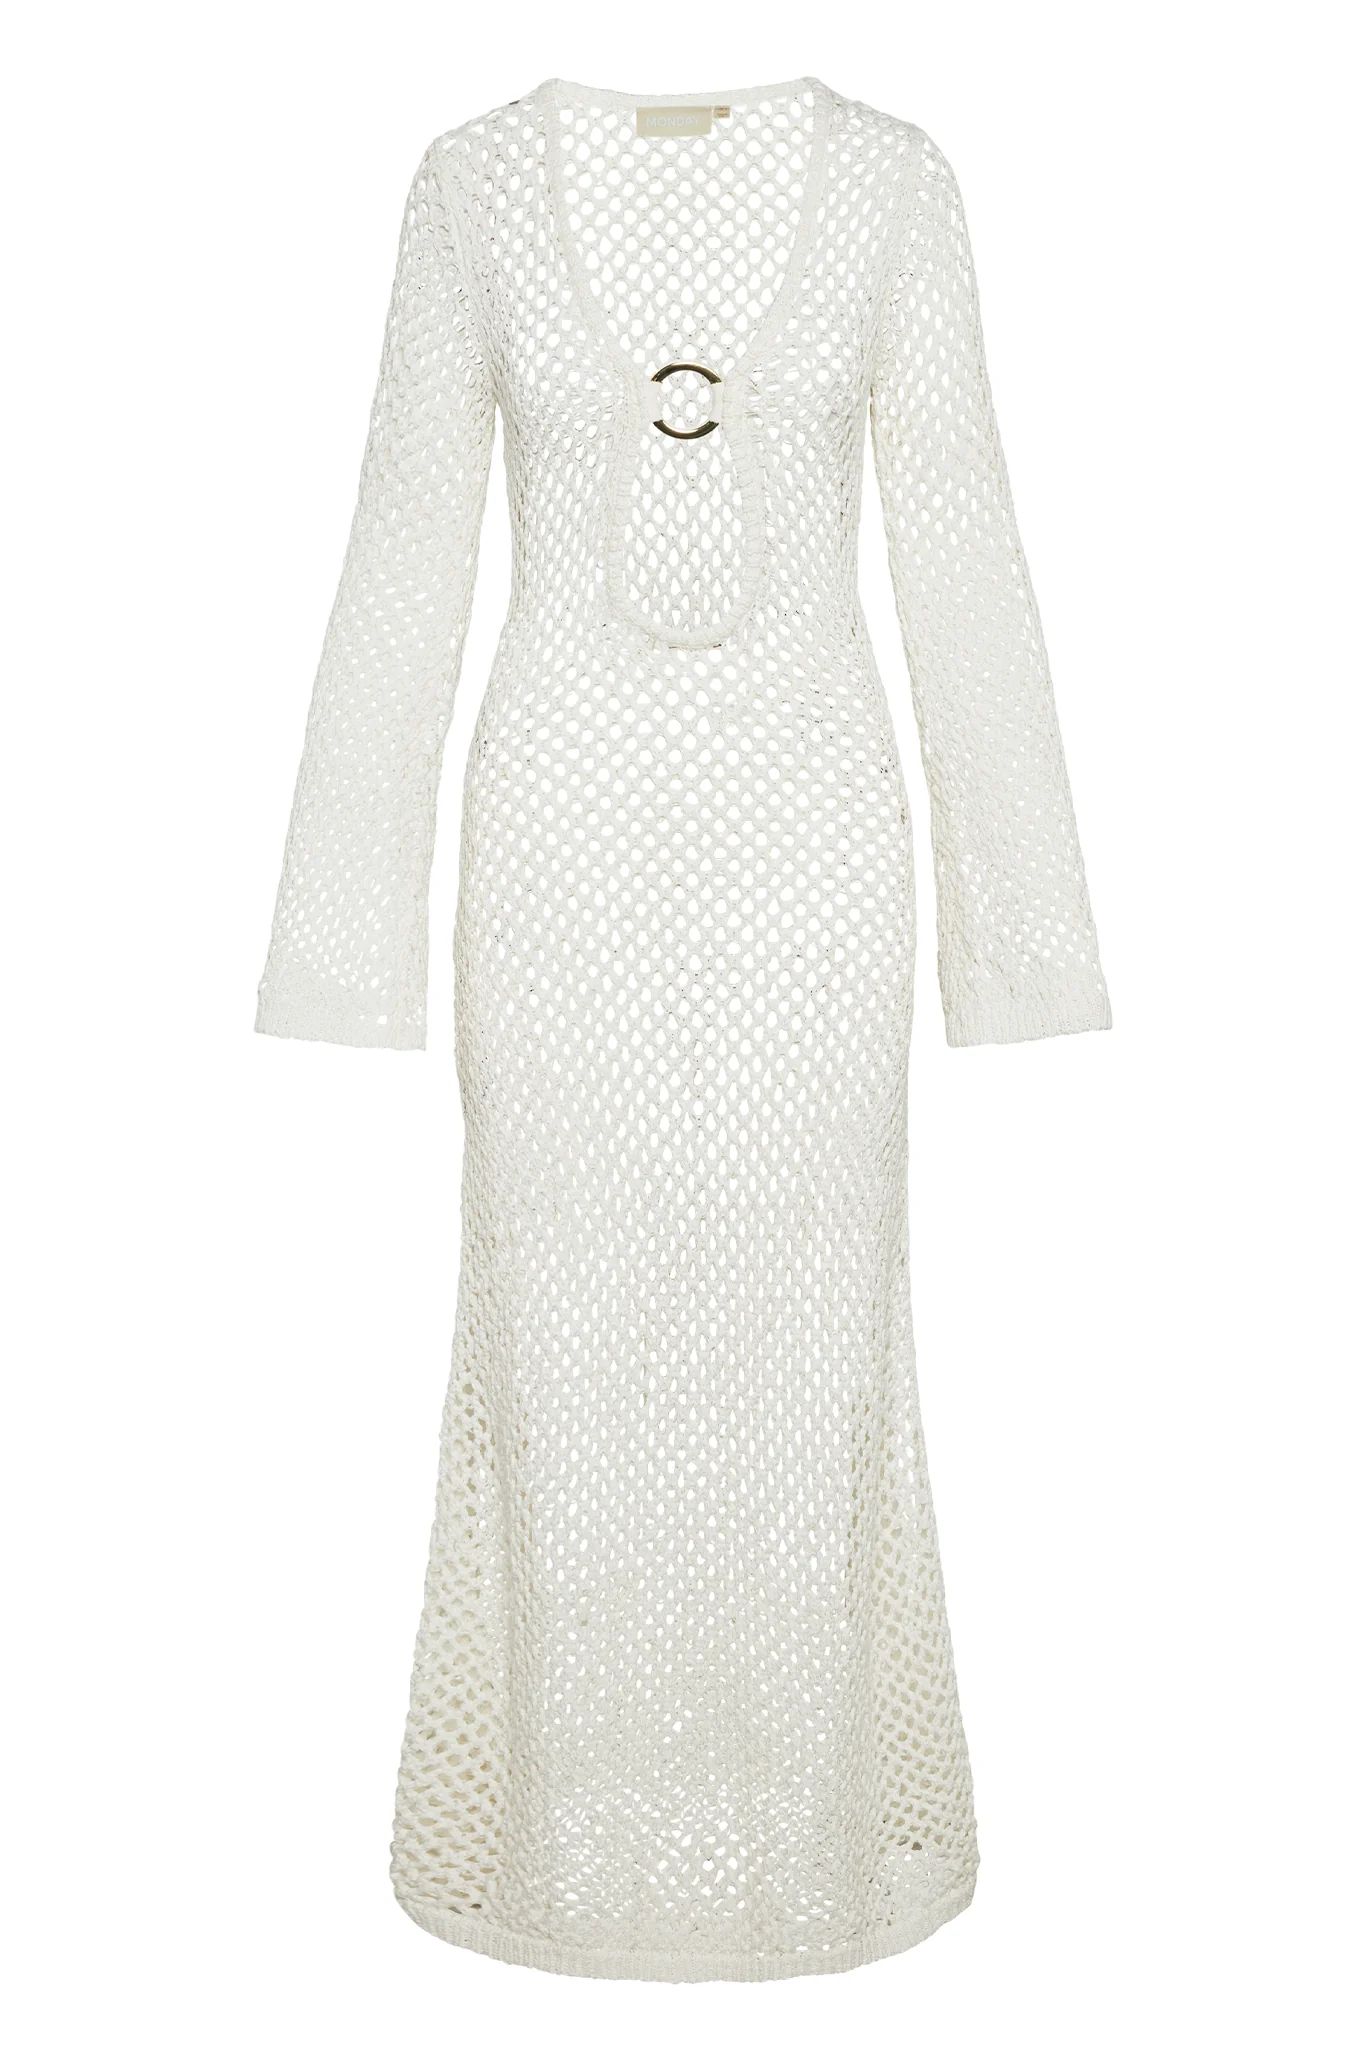 Montego Dress - White Crochet | Monday Swimwear